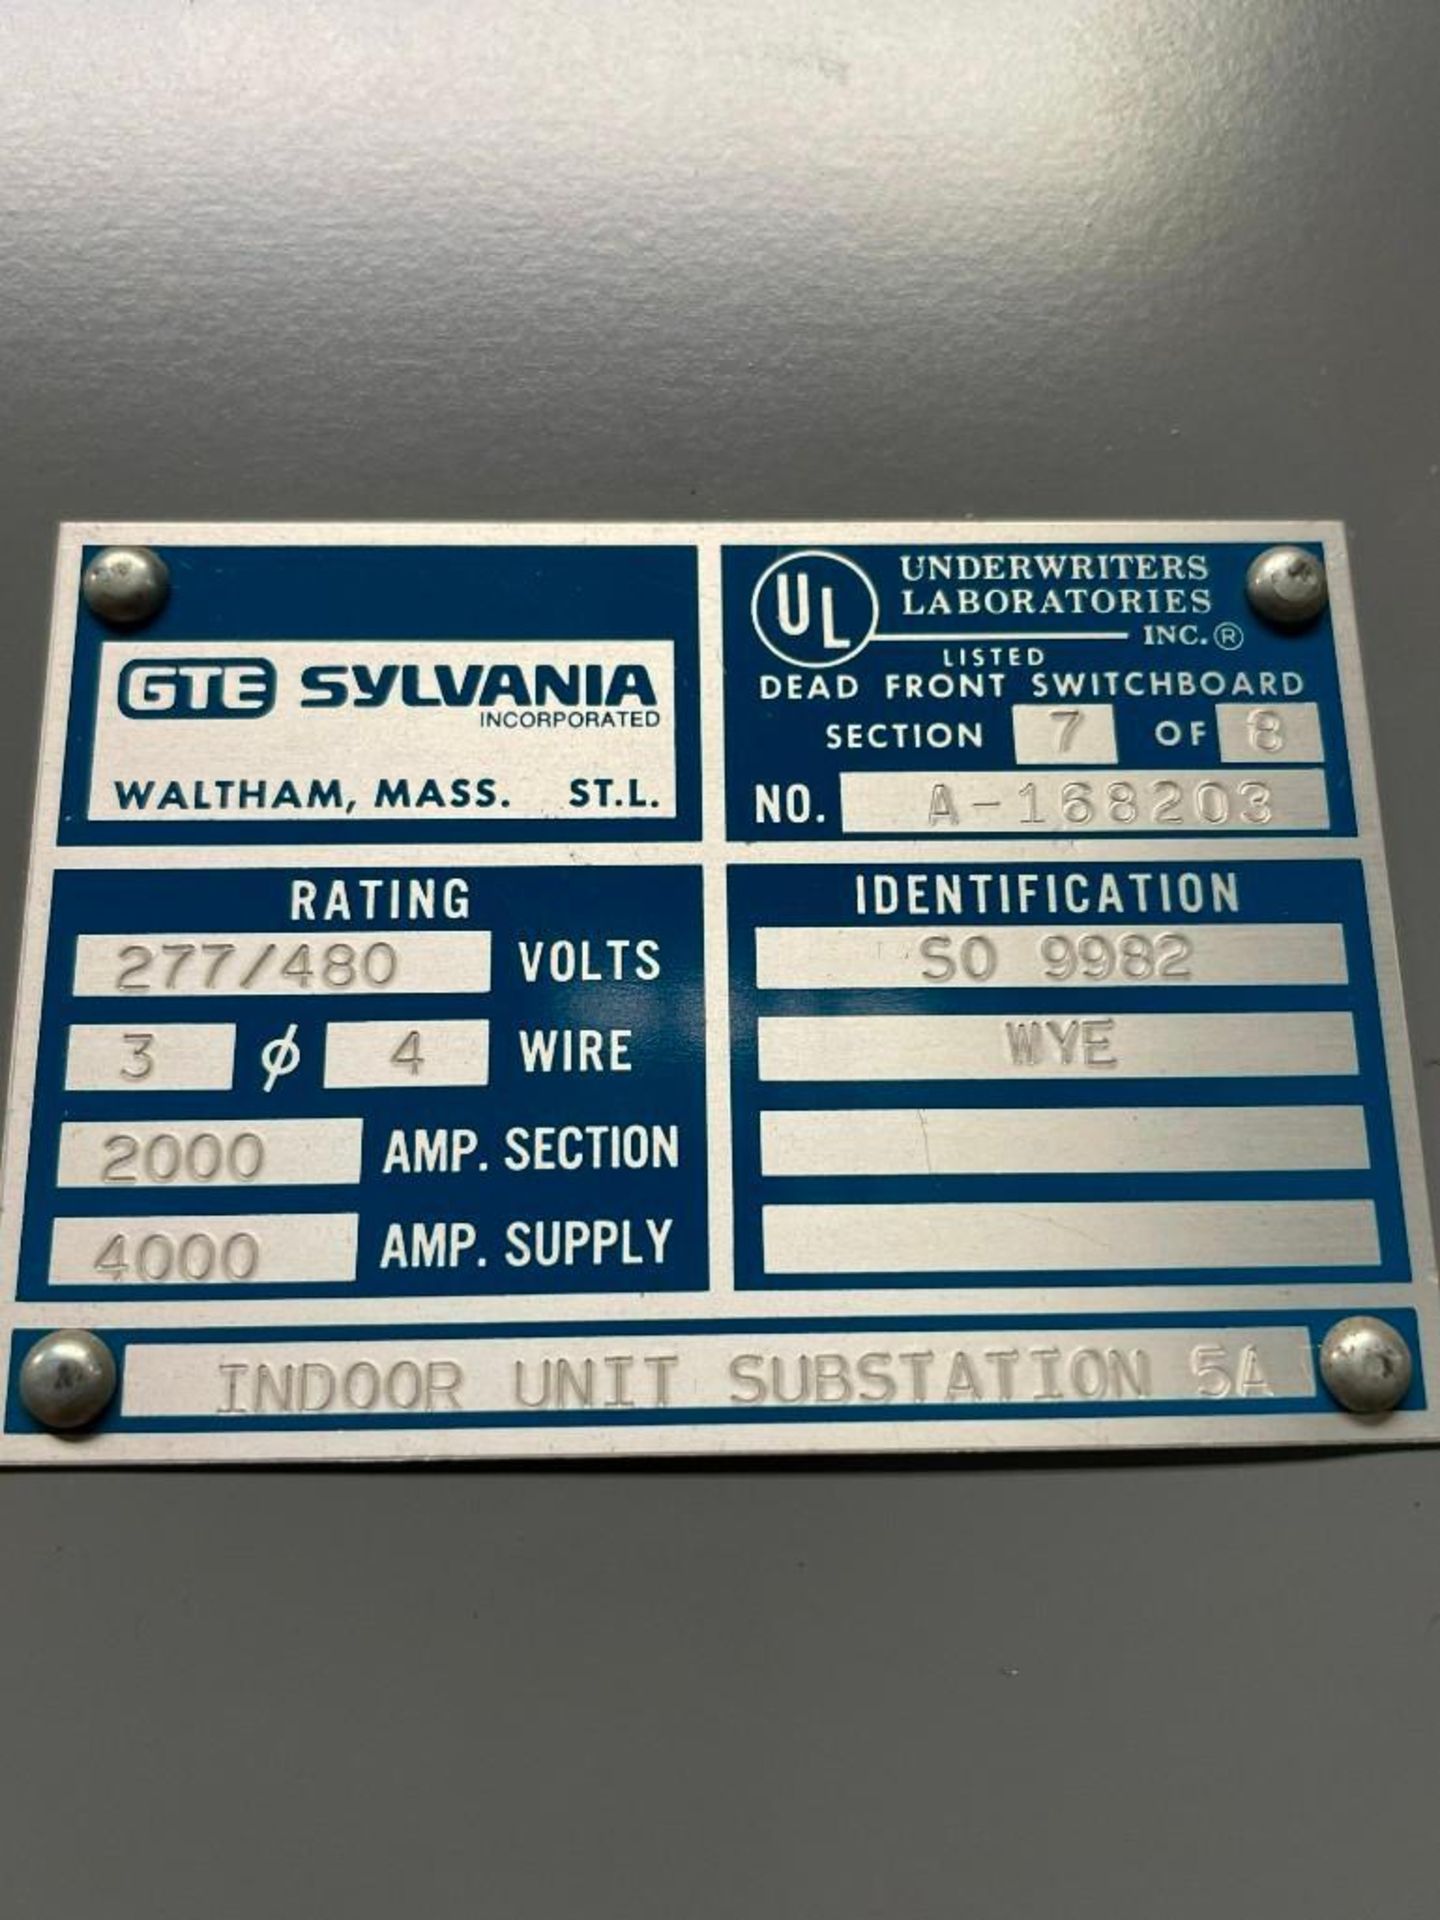 Sylvania Model SO9982 Indoor Unit Substation w 4 QSF Buckets - Image 5 of 5